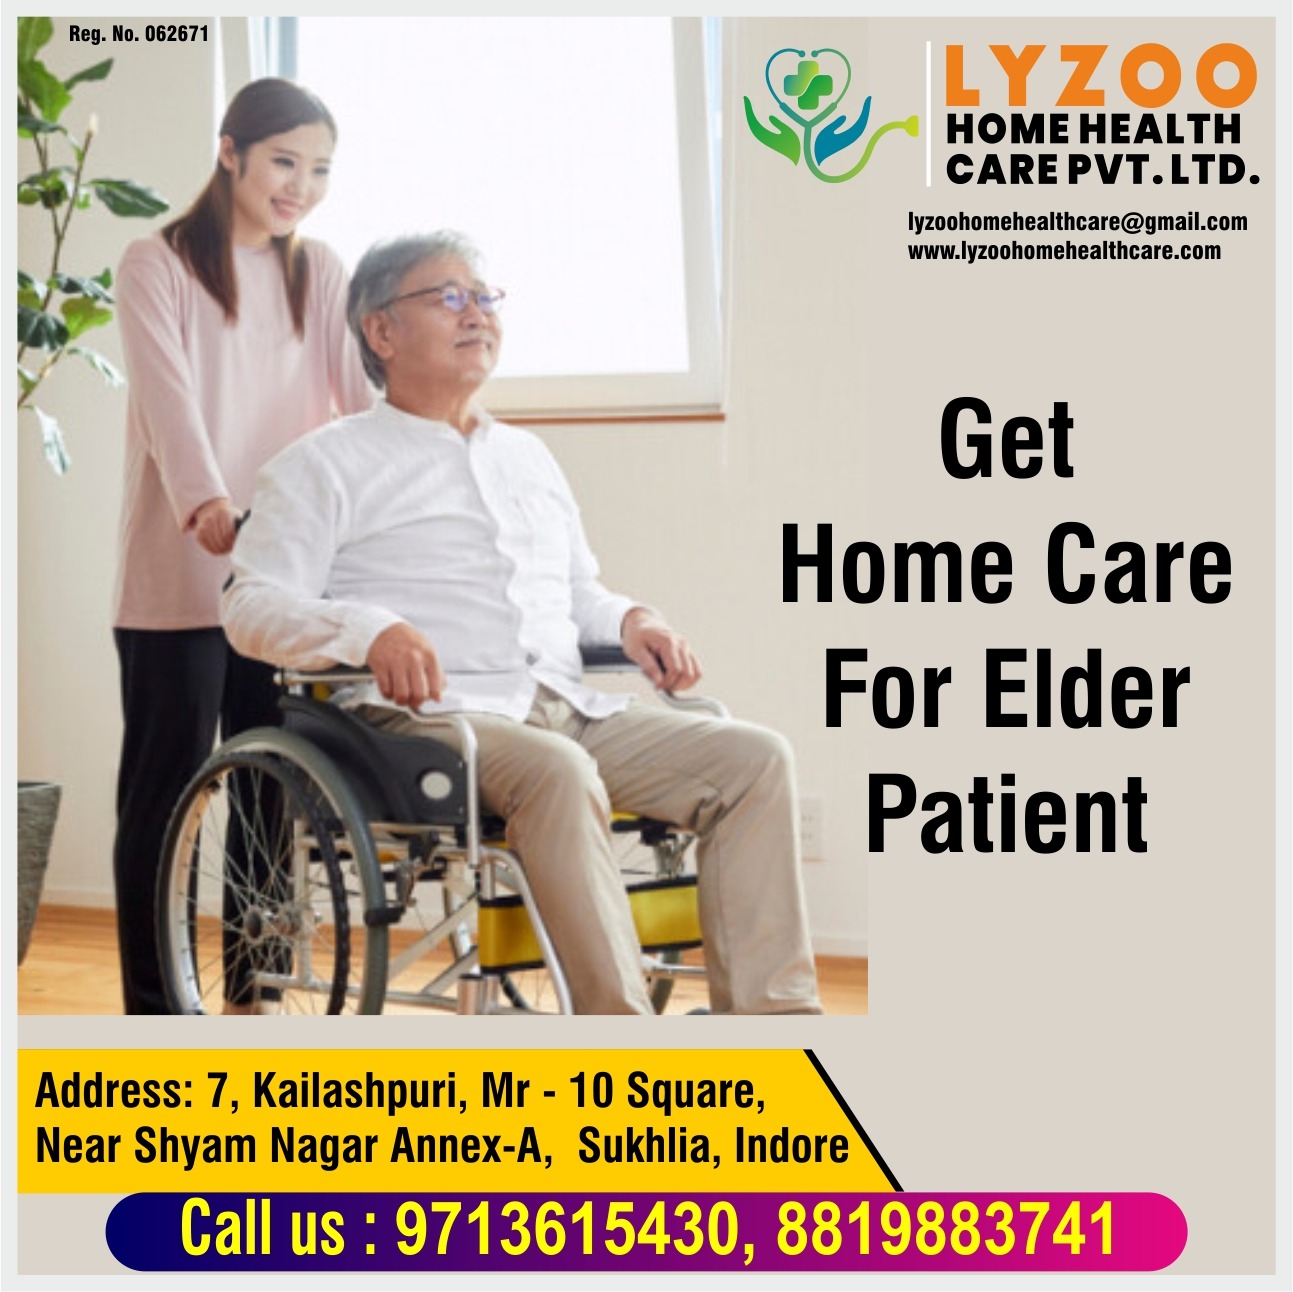 Best Nursing Services for Elderly Care in Indore